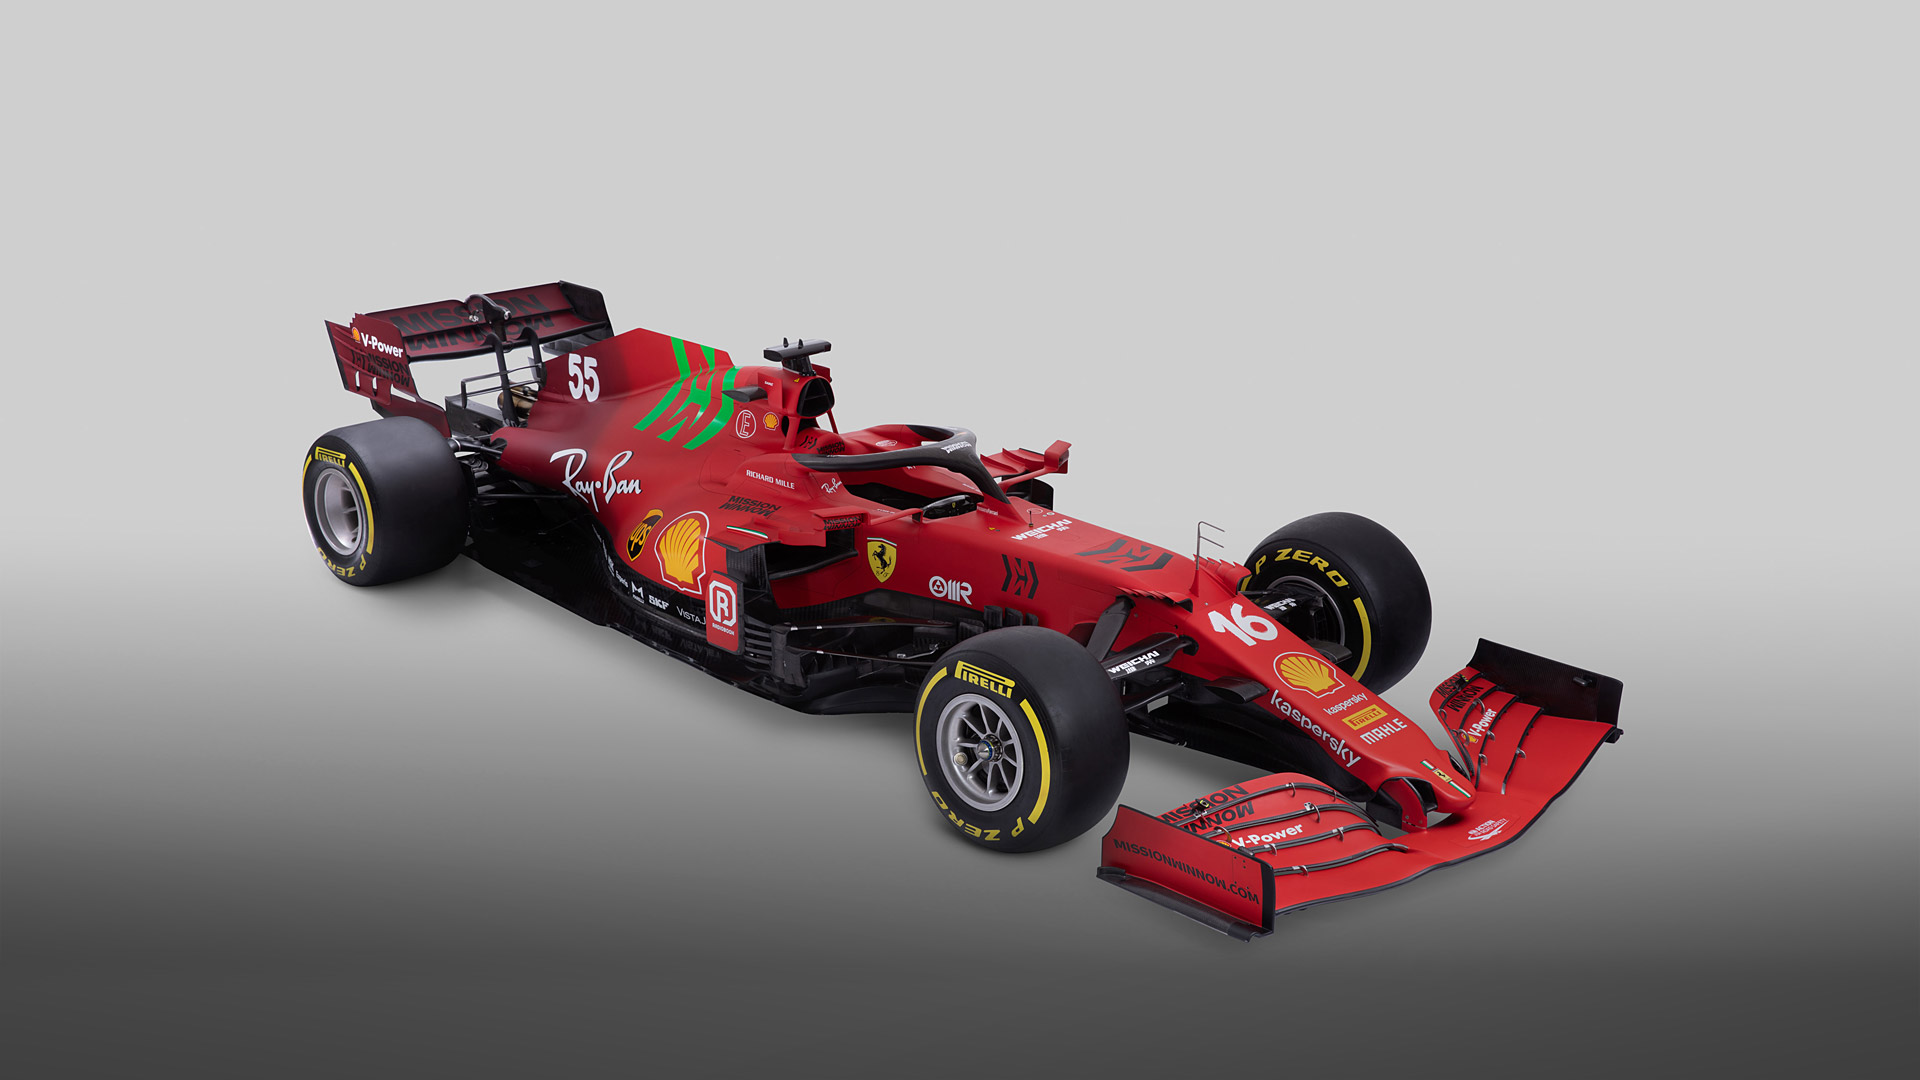 General 1920x1080 Formula 1 racing motorsport formula cars Ferrari Scuderia Ferrari SF21 car race cars vehicle red cars sport